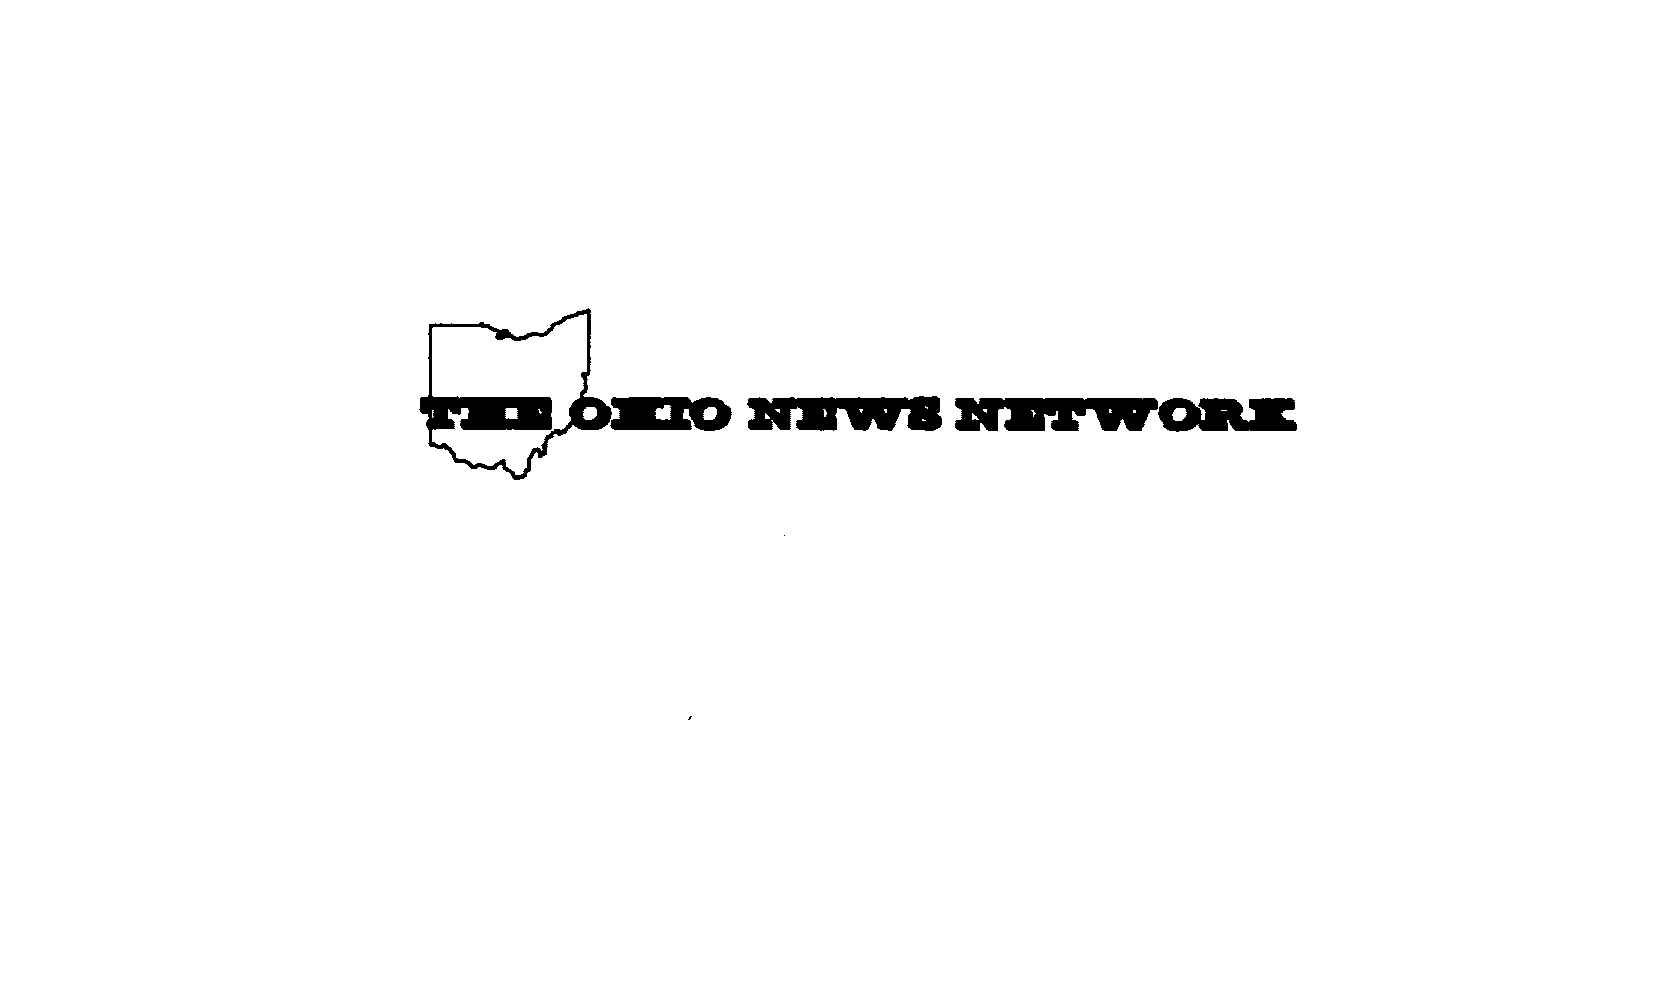  THE OHIO NEWS NETWORK